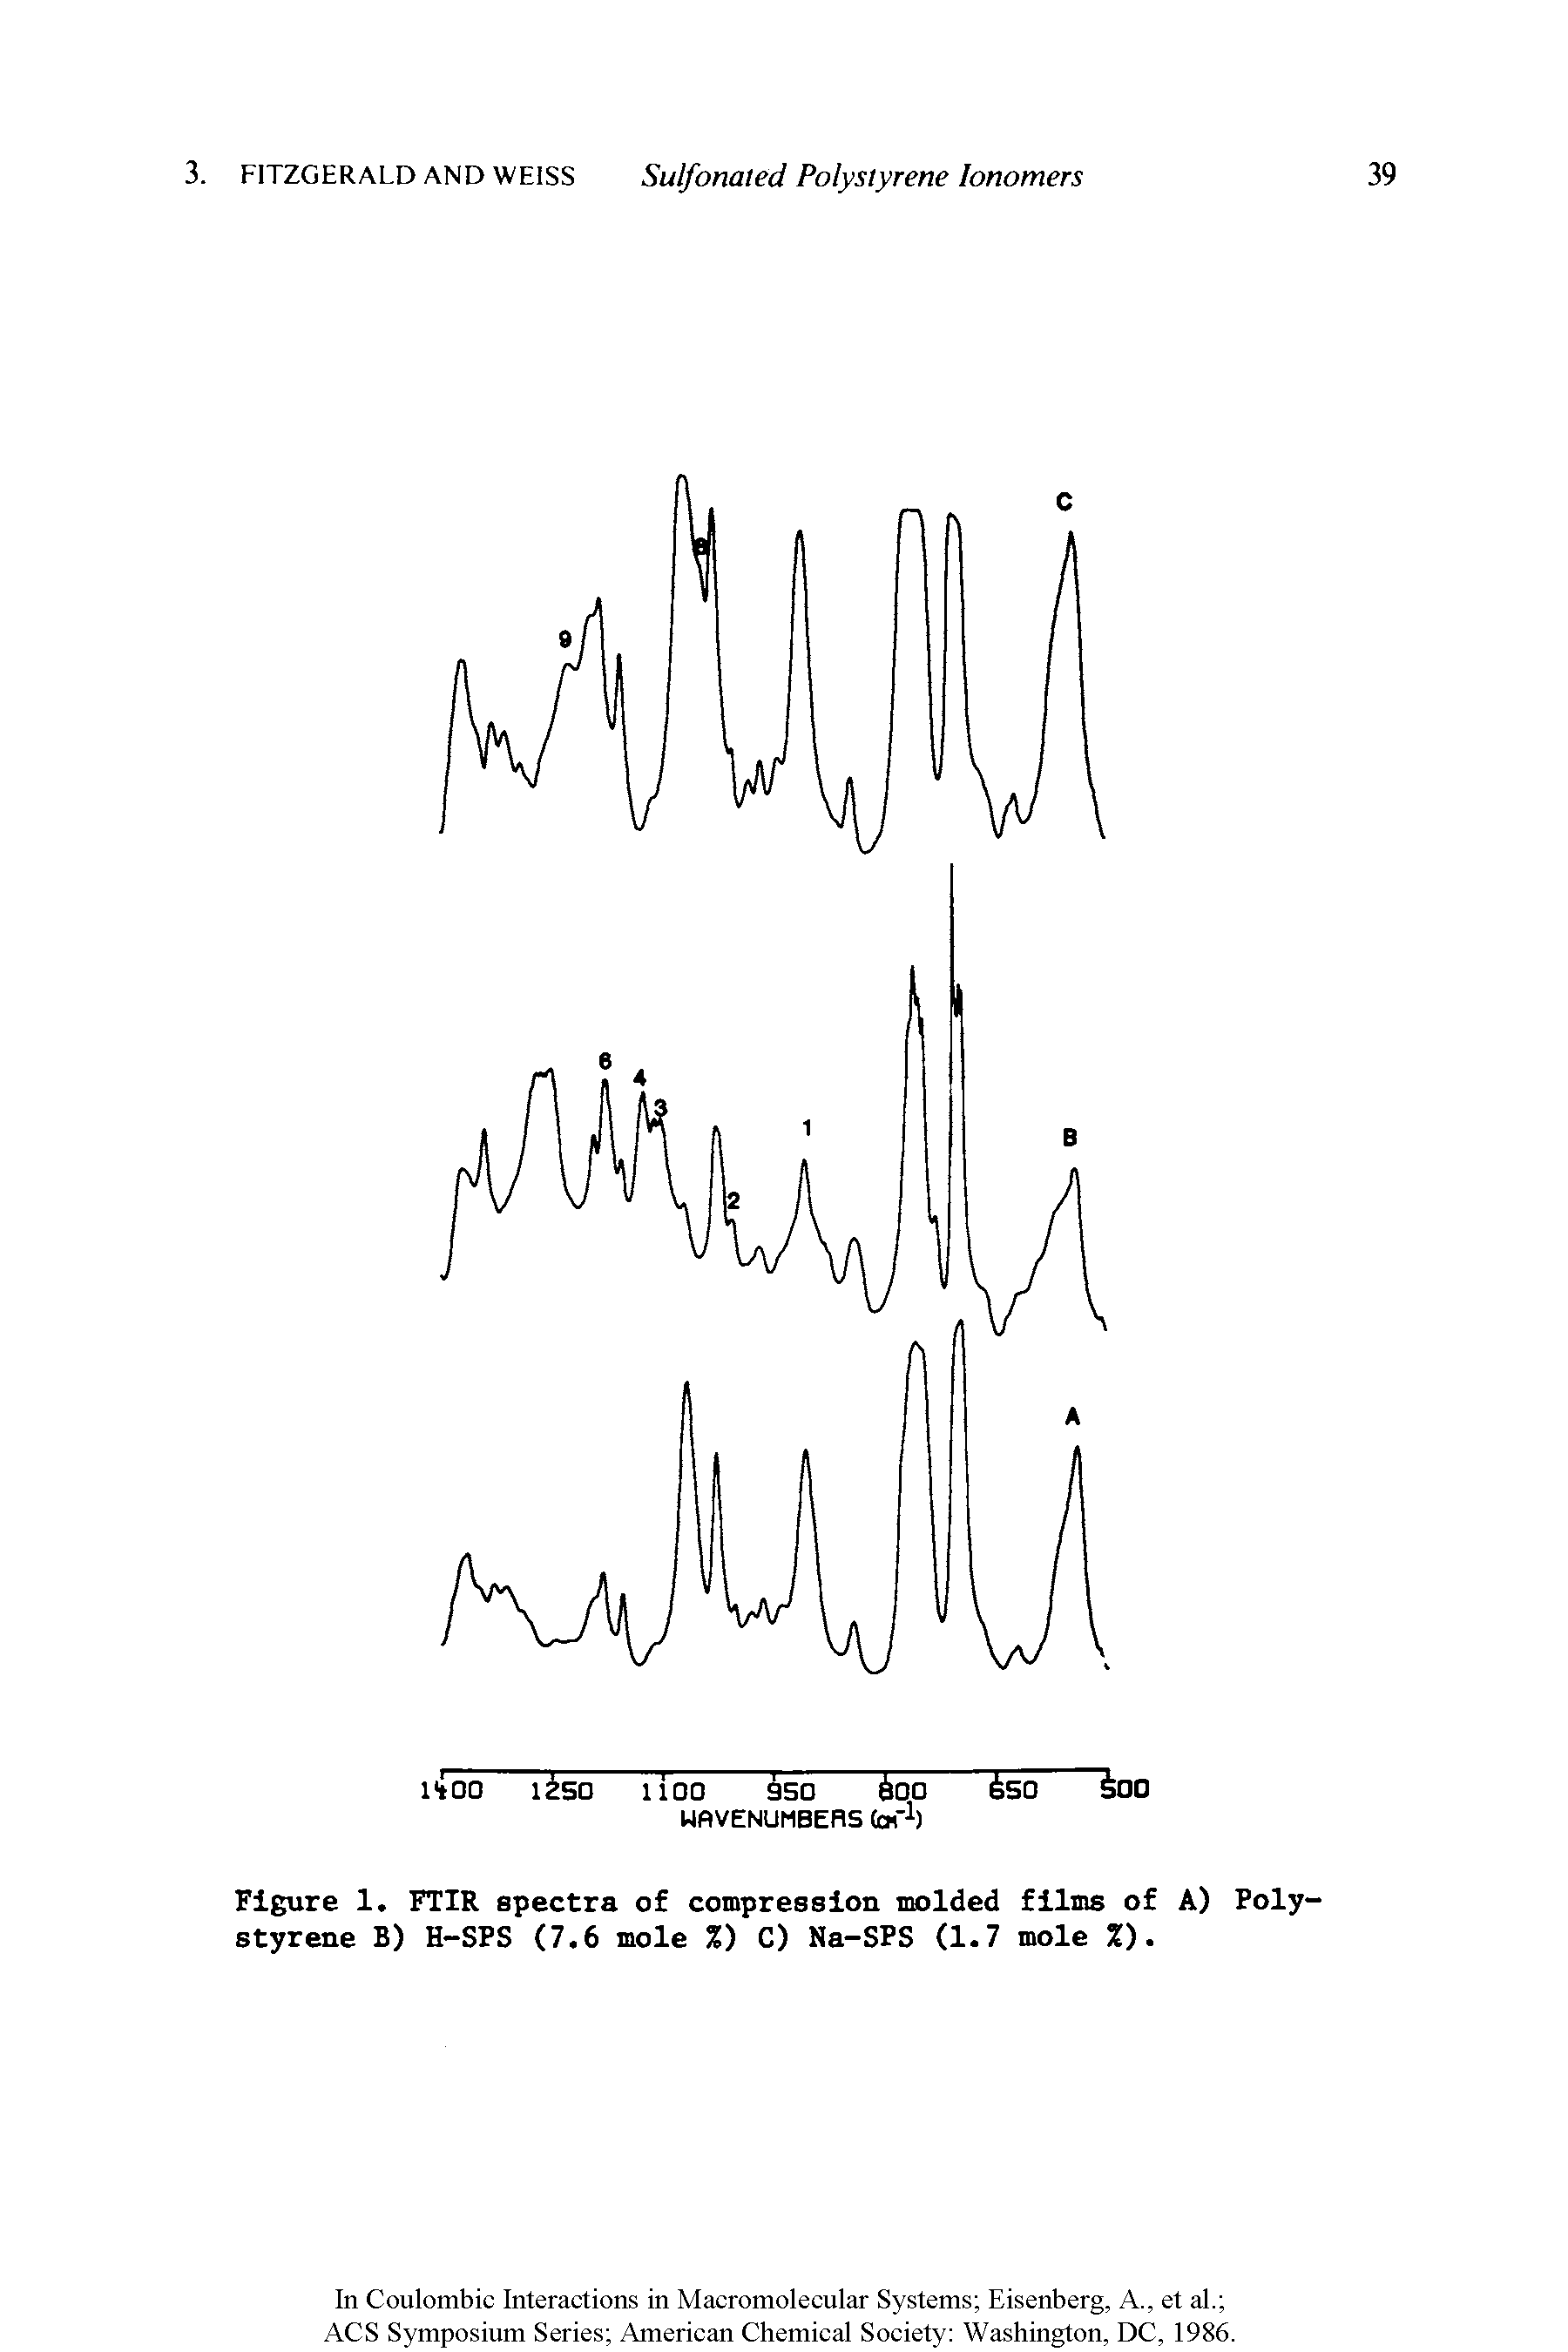 Figure 1. FTIR spectra of compression molded films of A) Polystyrene B) H-SPS (7.6 mole %) C) Na-SPS (1.7 mole %).